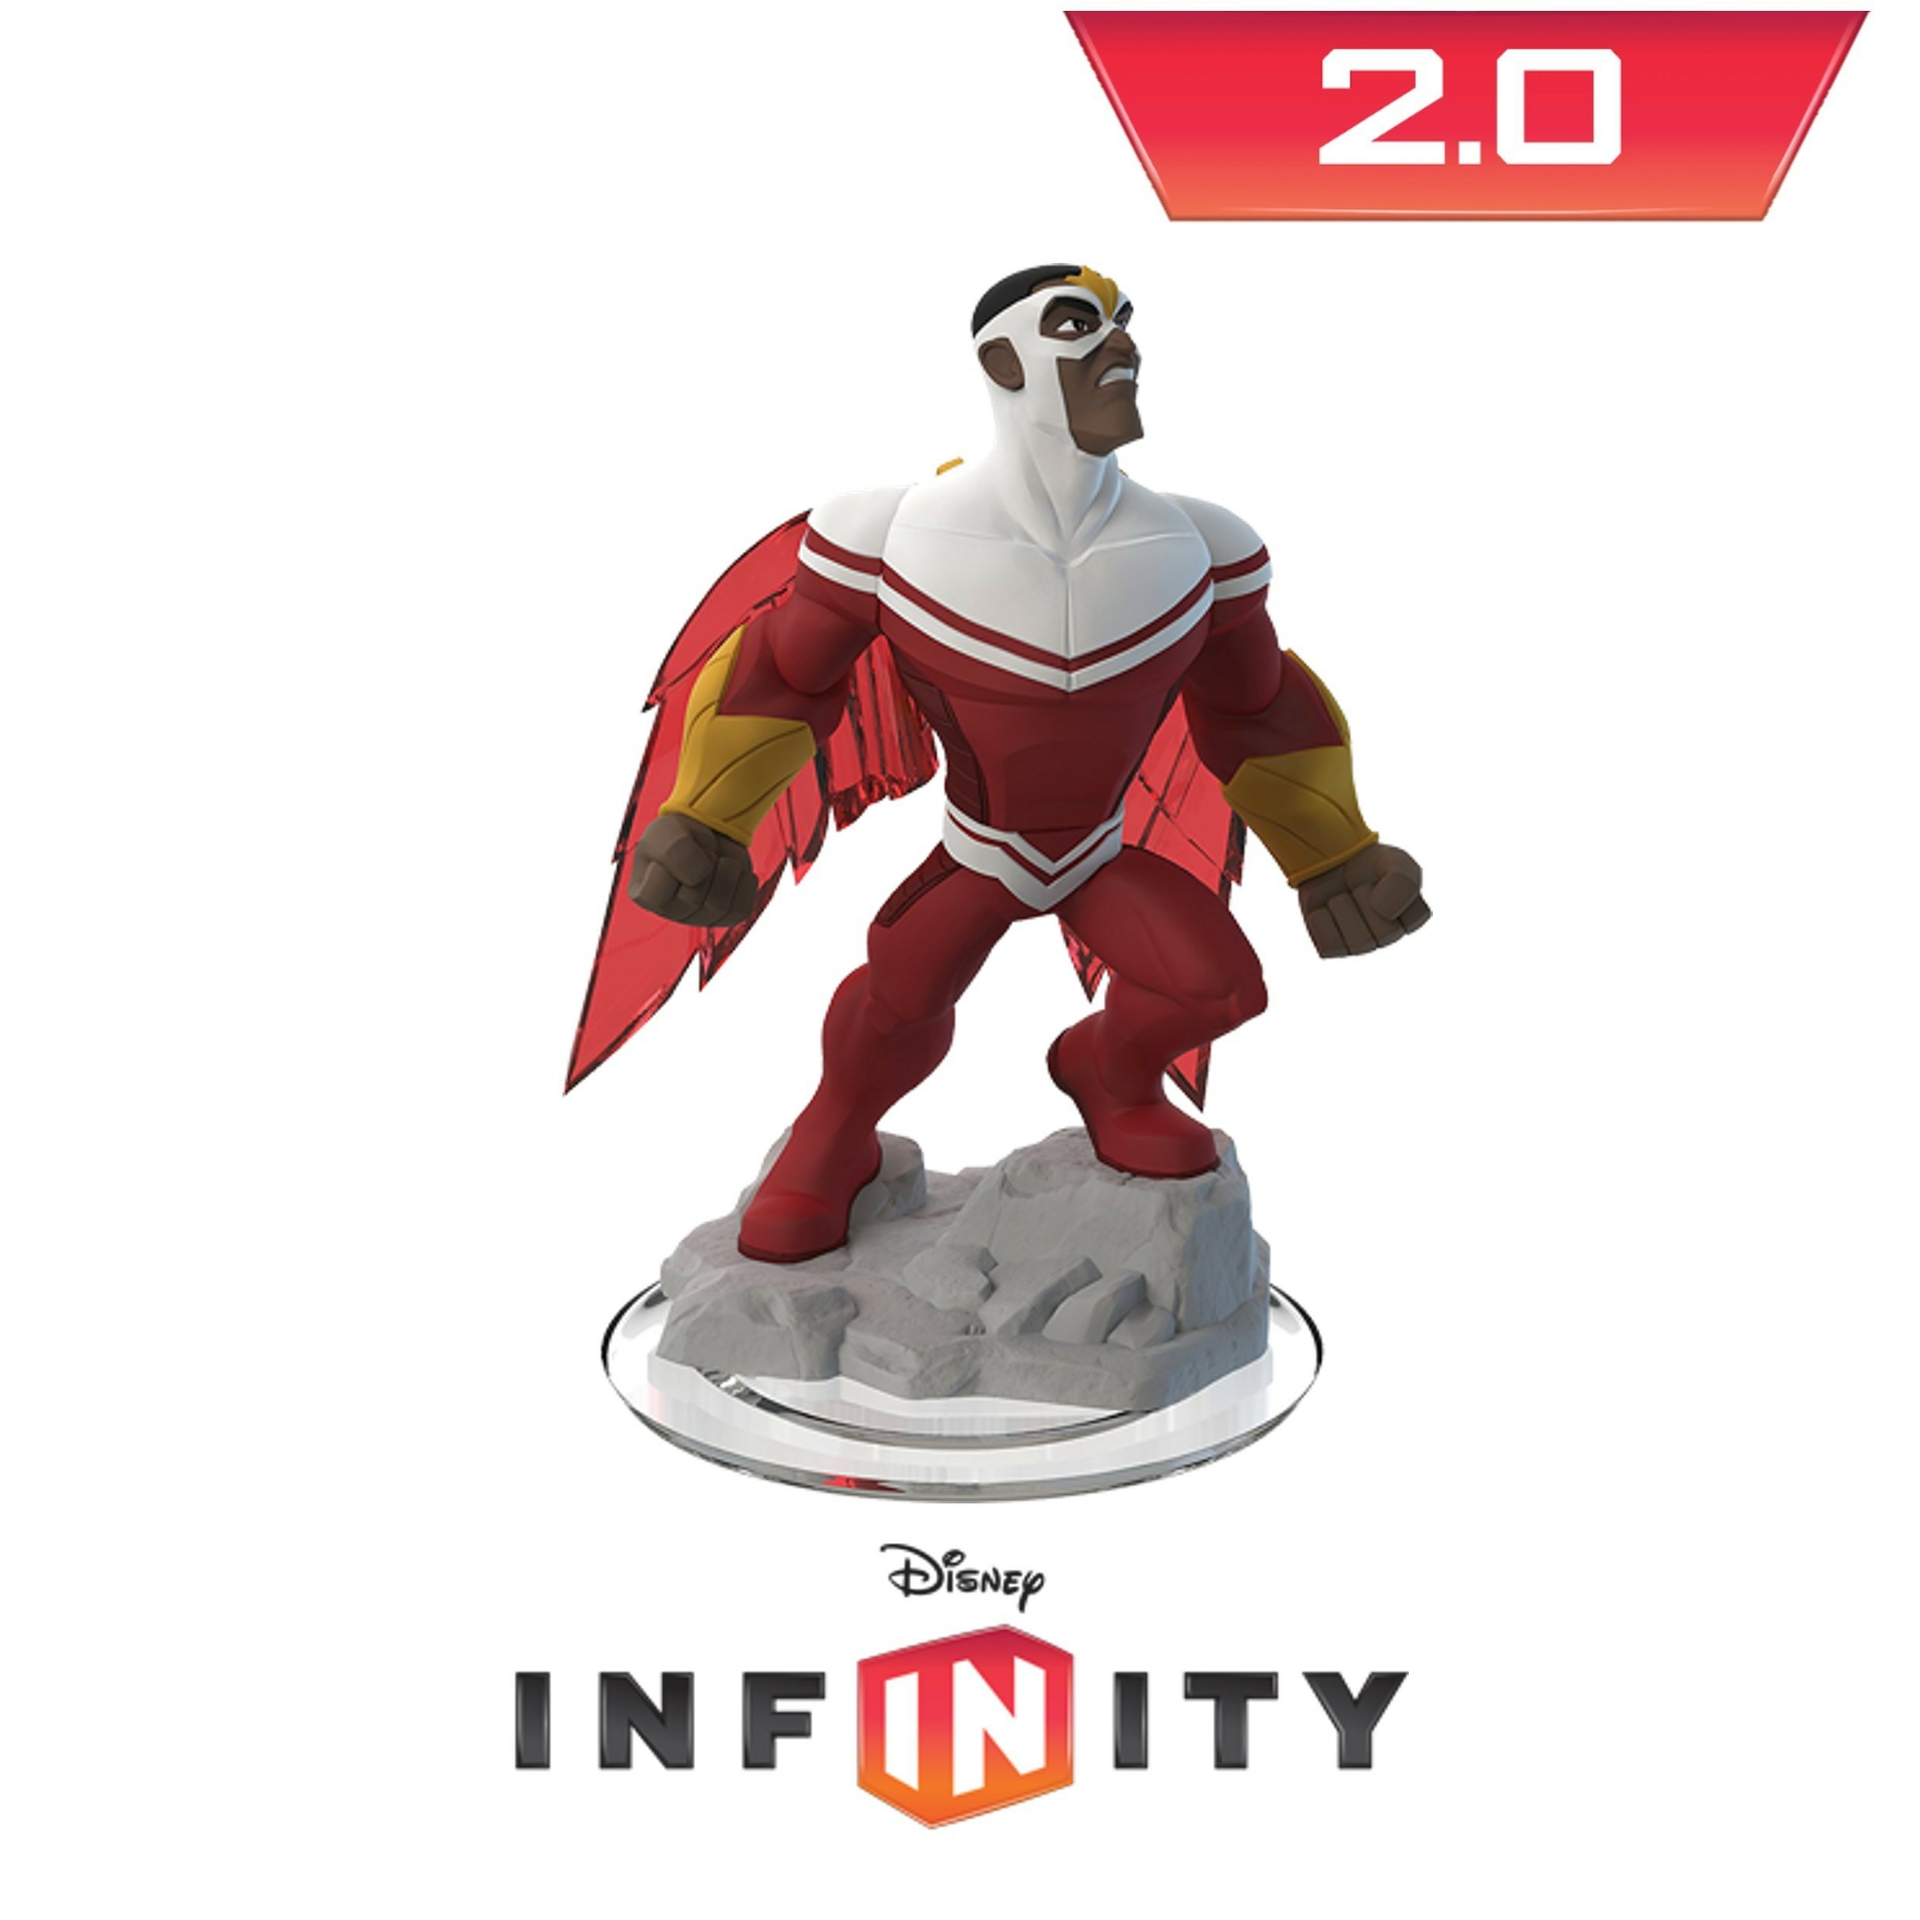 Disney infinity - Falcon - Xbox 360 Hardware